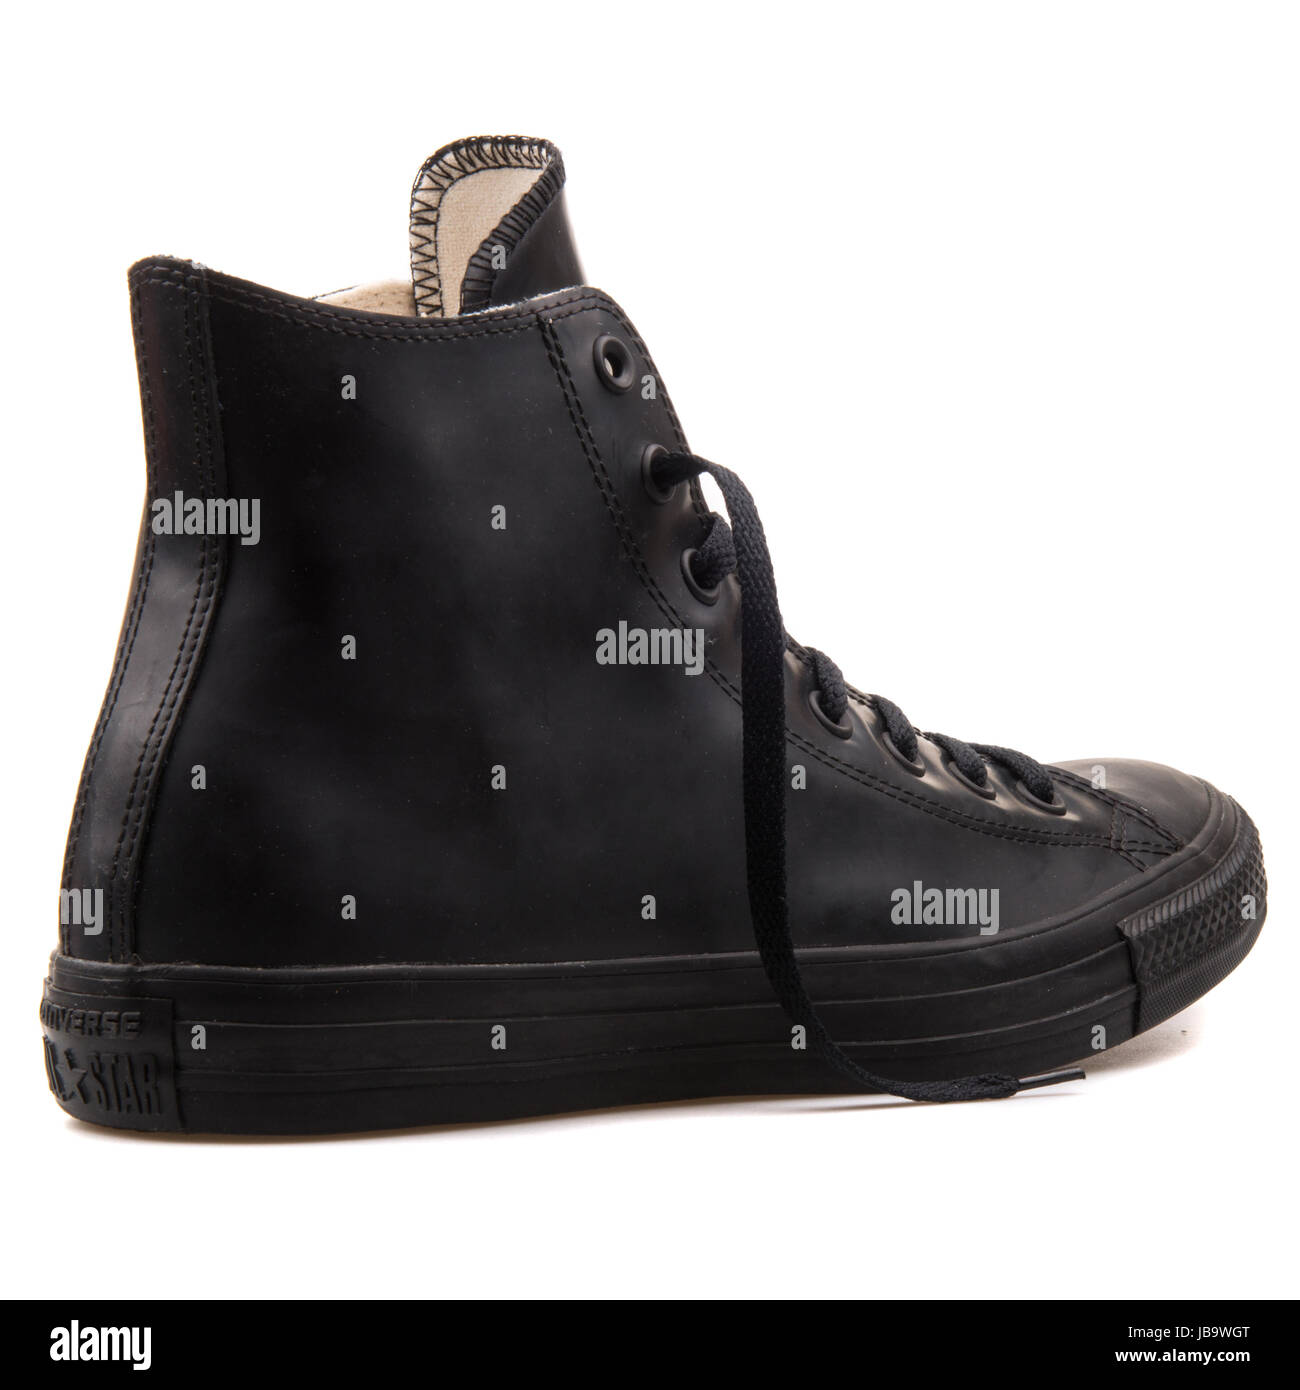 Converse Chuck Taylor All Star Hi Black Unisex Shoes - 144740C Stock Photo  - Alamy